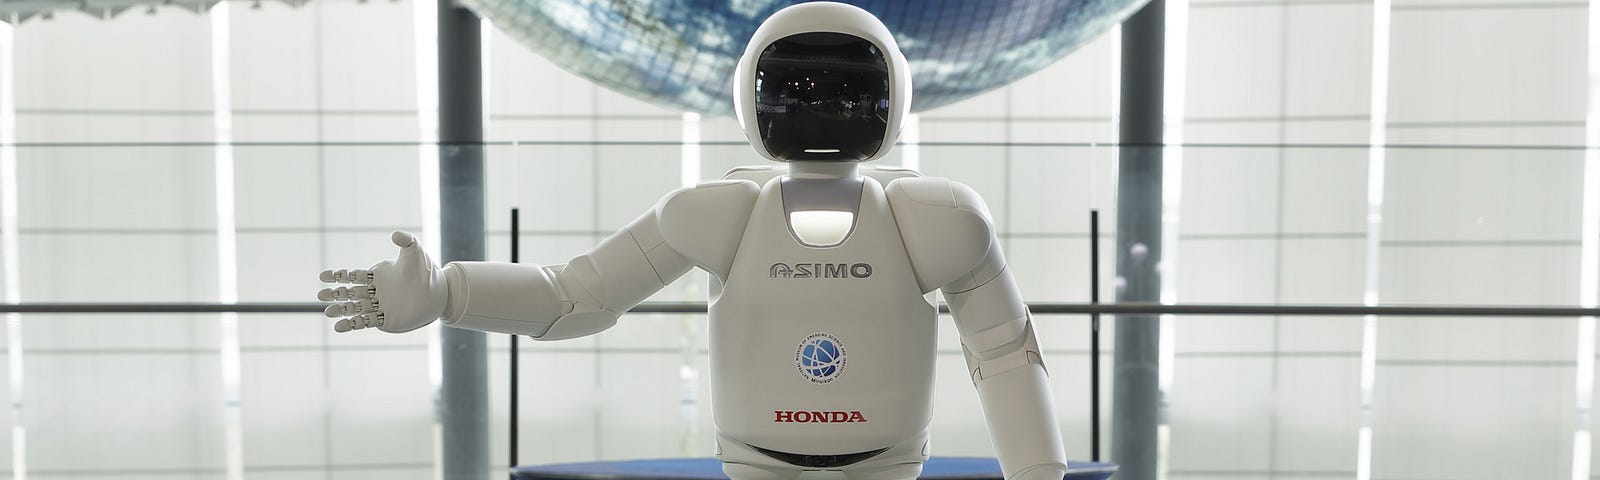 ASIMO, Honda’s humanoid at the National Museum of Emerging Science and Innovation (Miraikan) in Tokyo, Japan